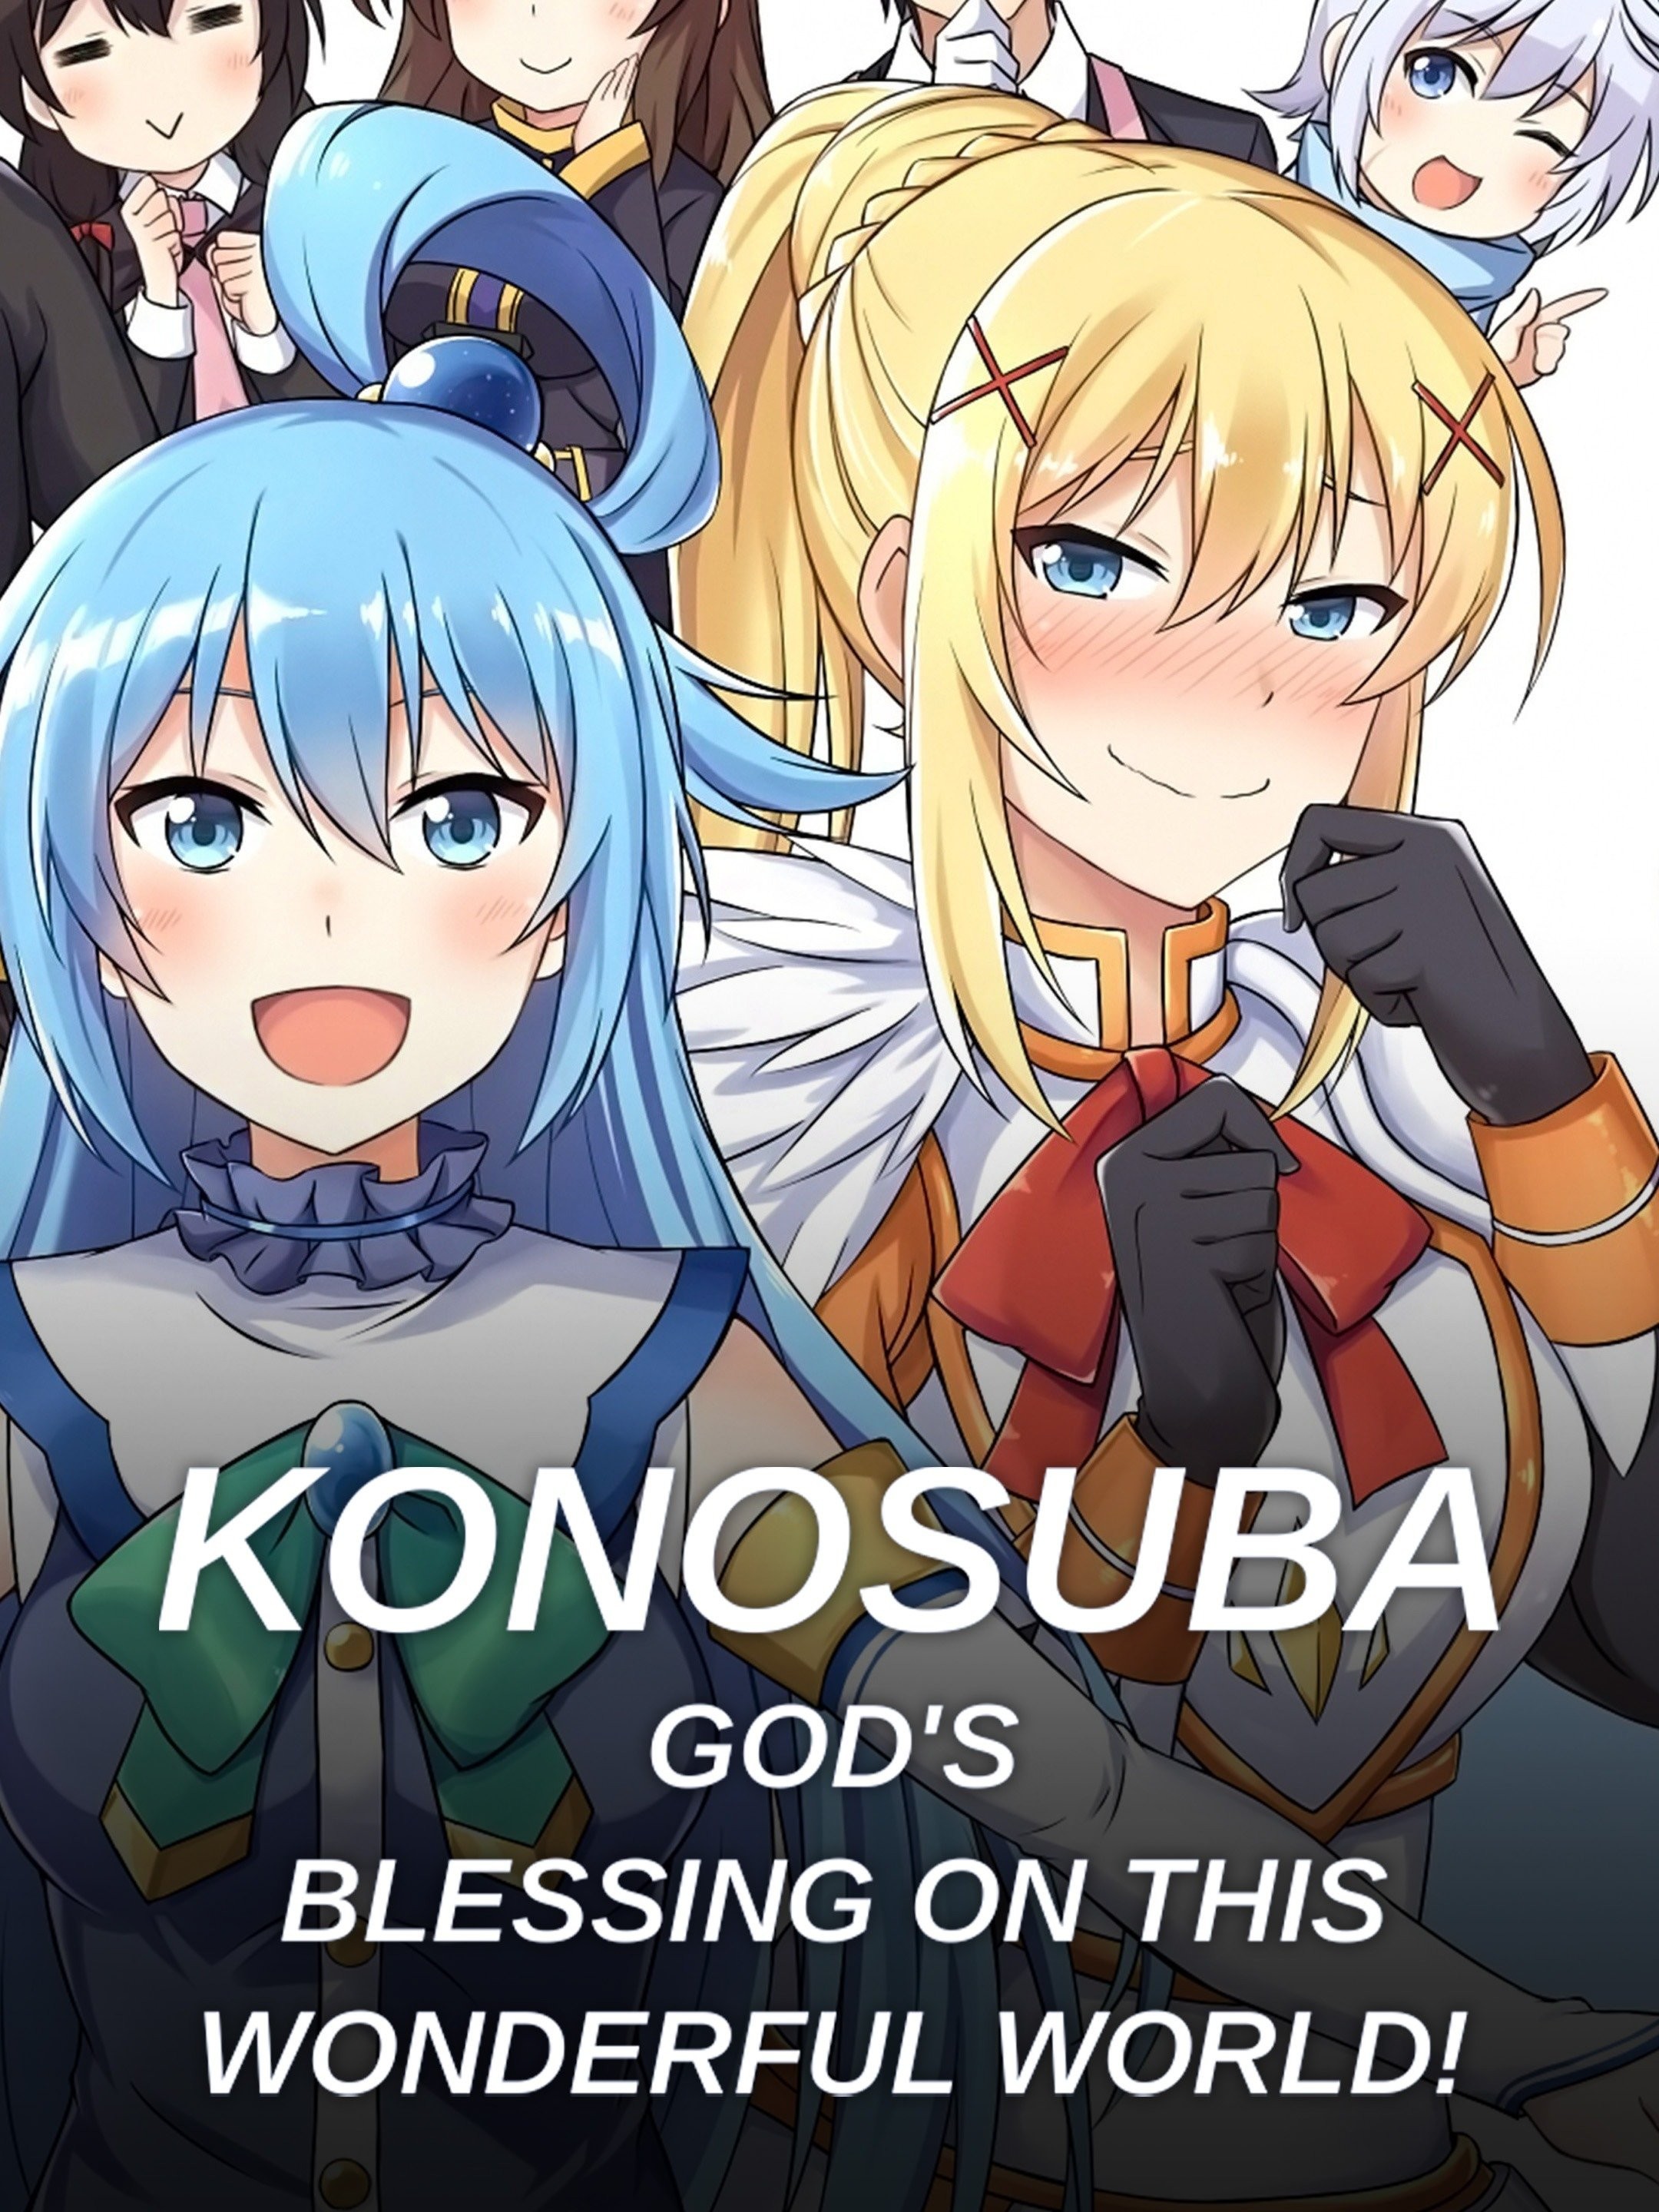 Konosuba voice actors in video games. : r/Konosuba